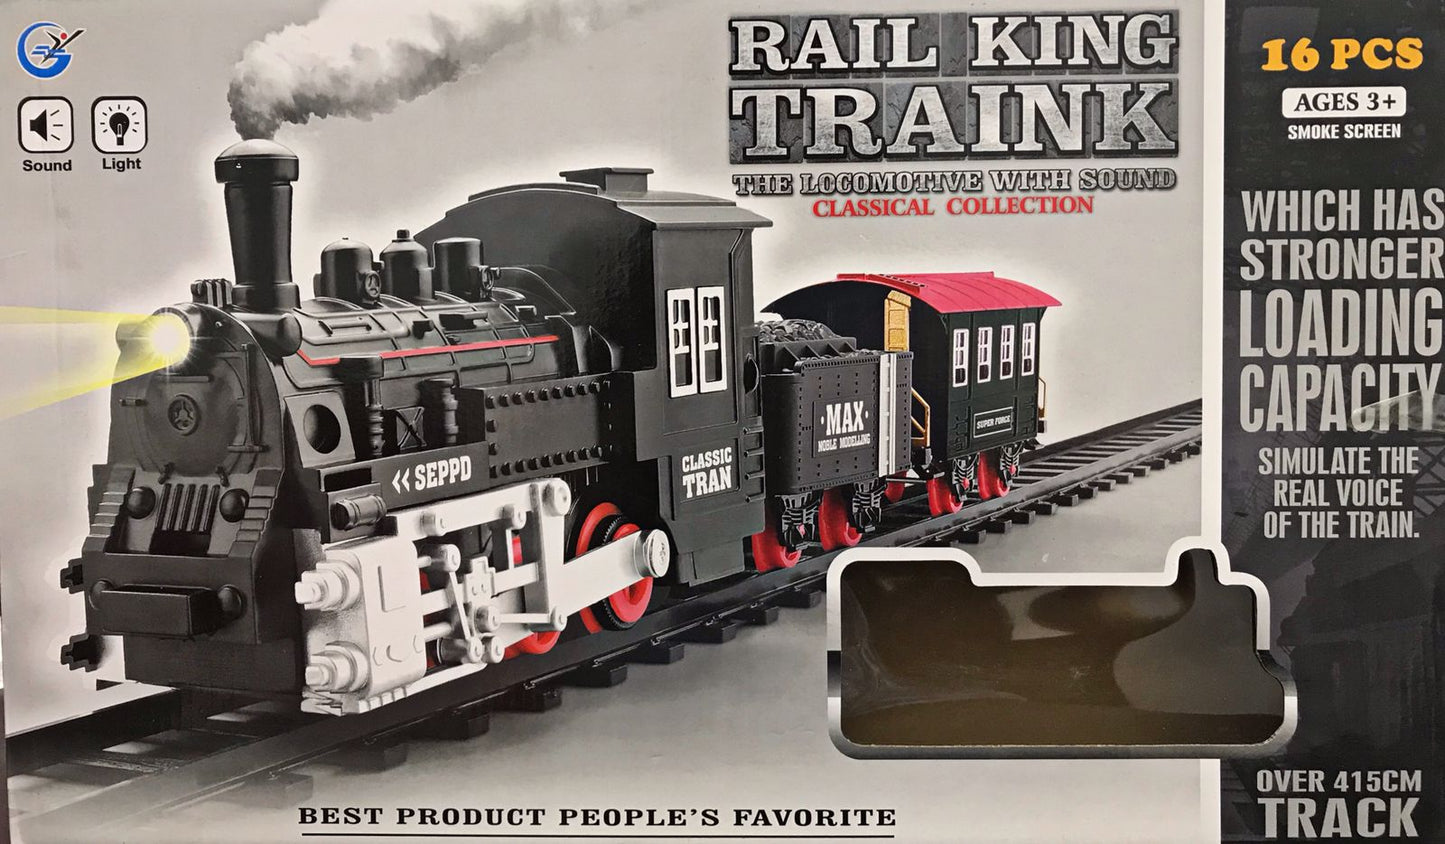 Pista de tren con humo Raíl King Traink 16PCS medida 415cm